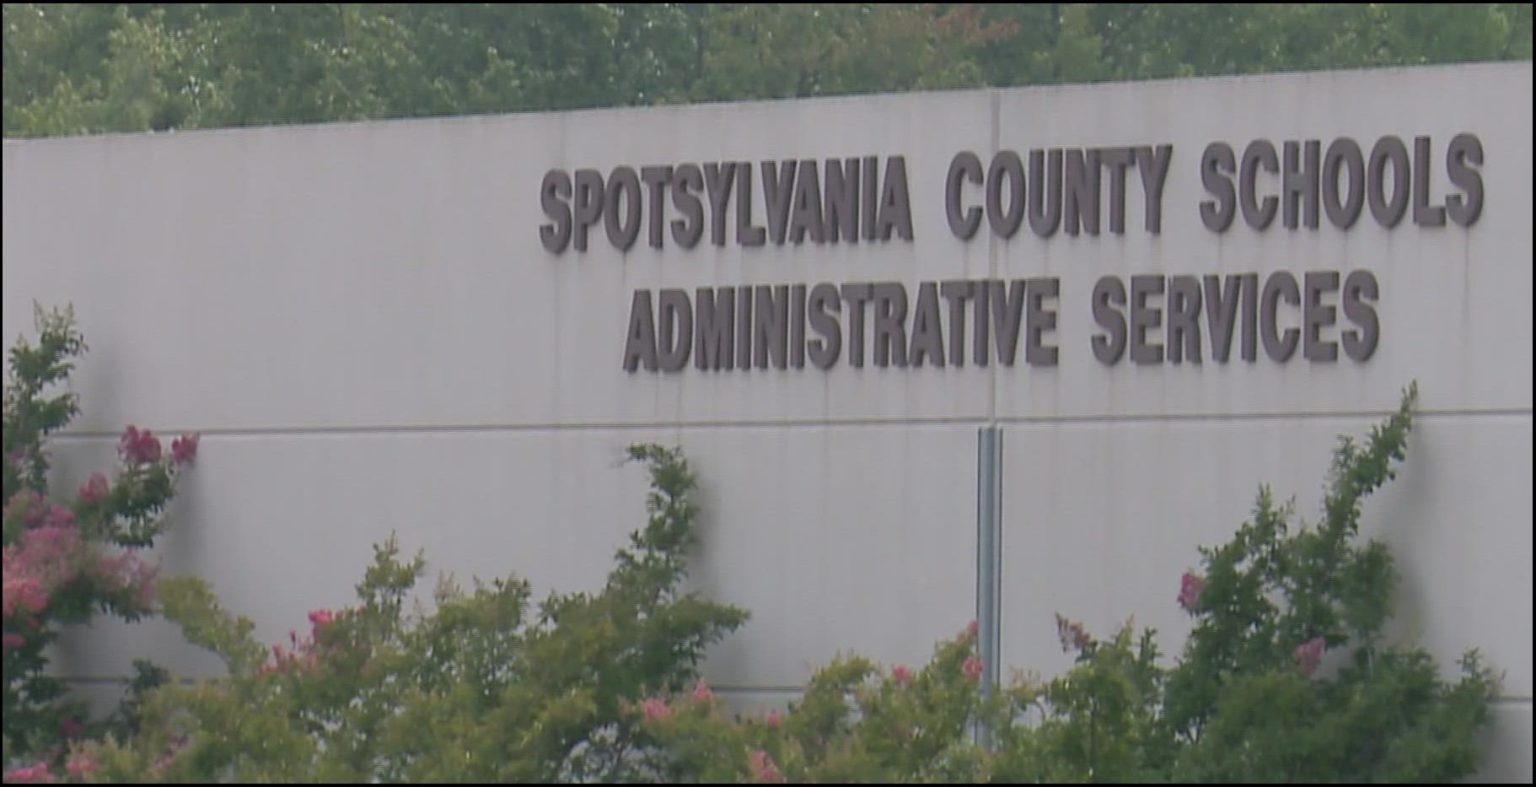 Spotsylvania County Schools Calendar Holidays 20232024